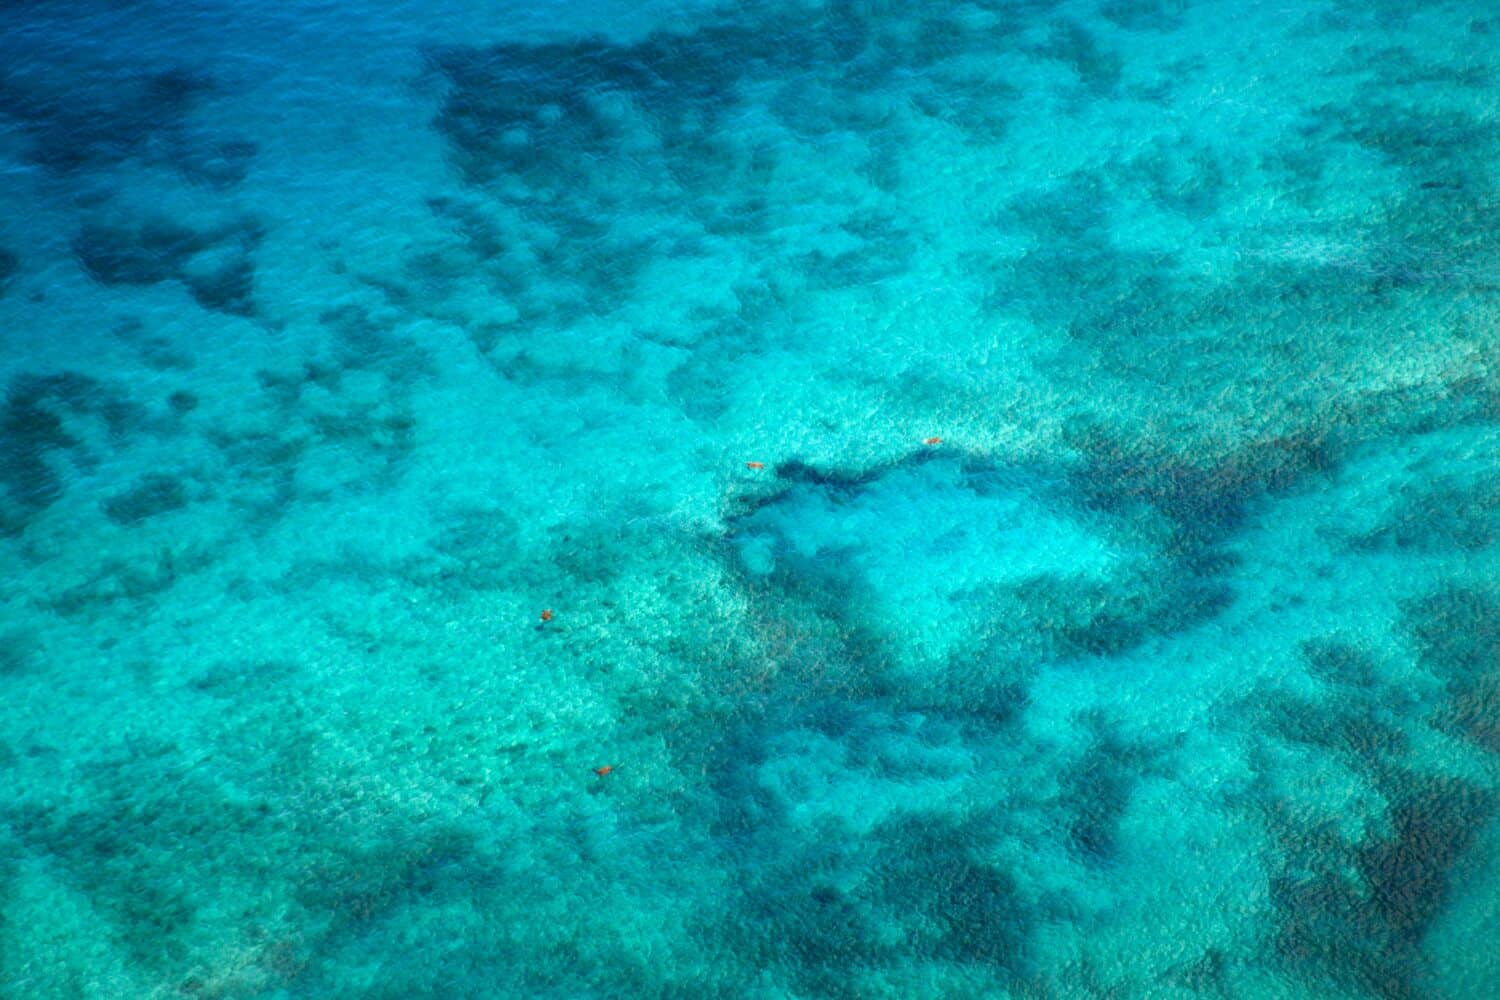 View through clear water to ocean floor.